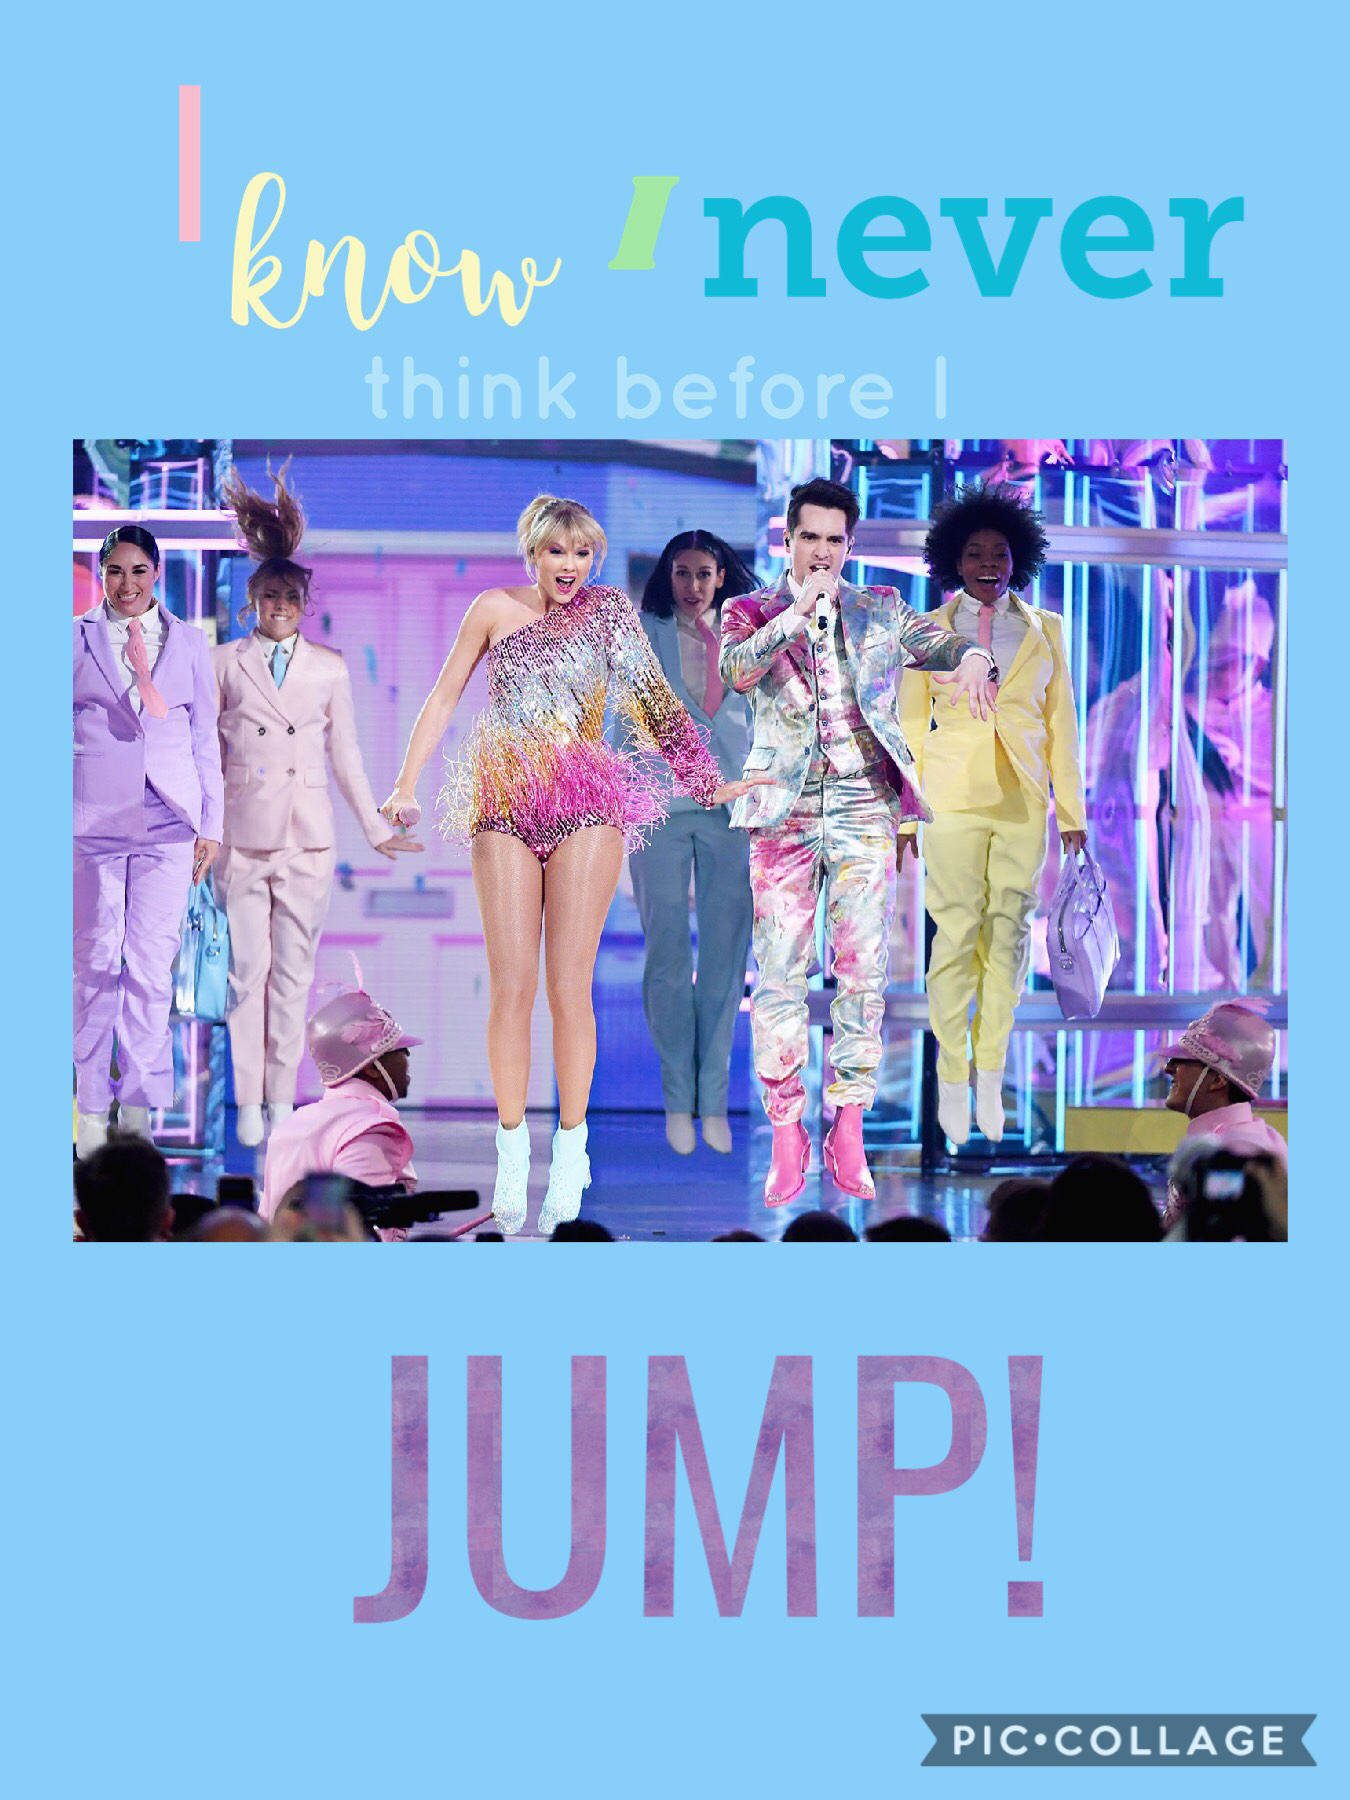 I know I never think before I jump! 🙇‍♀️